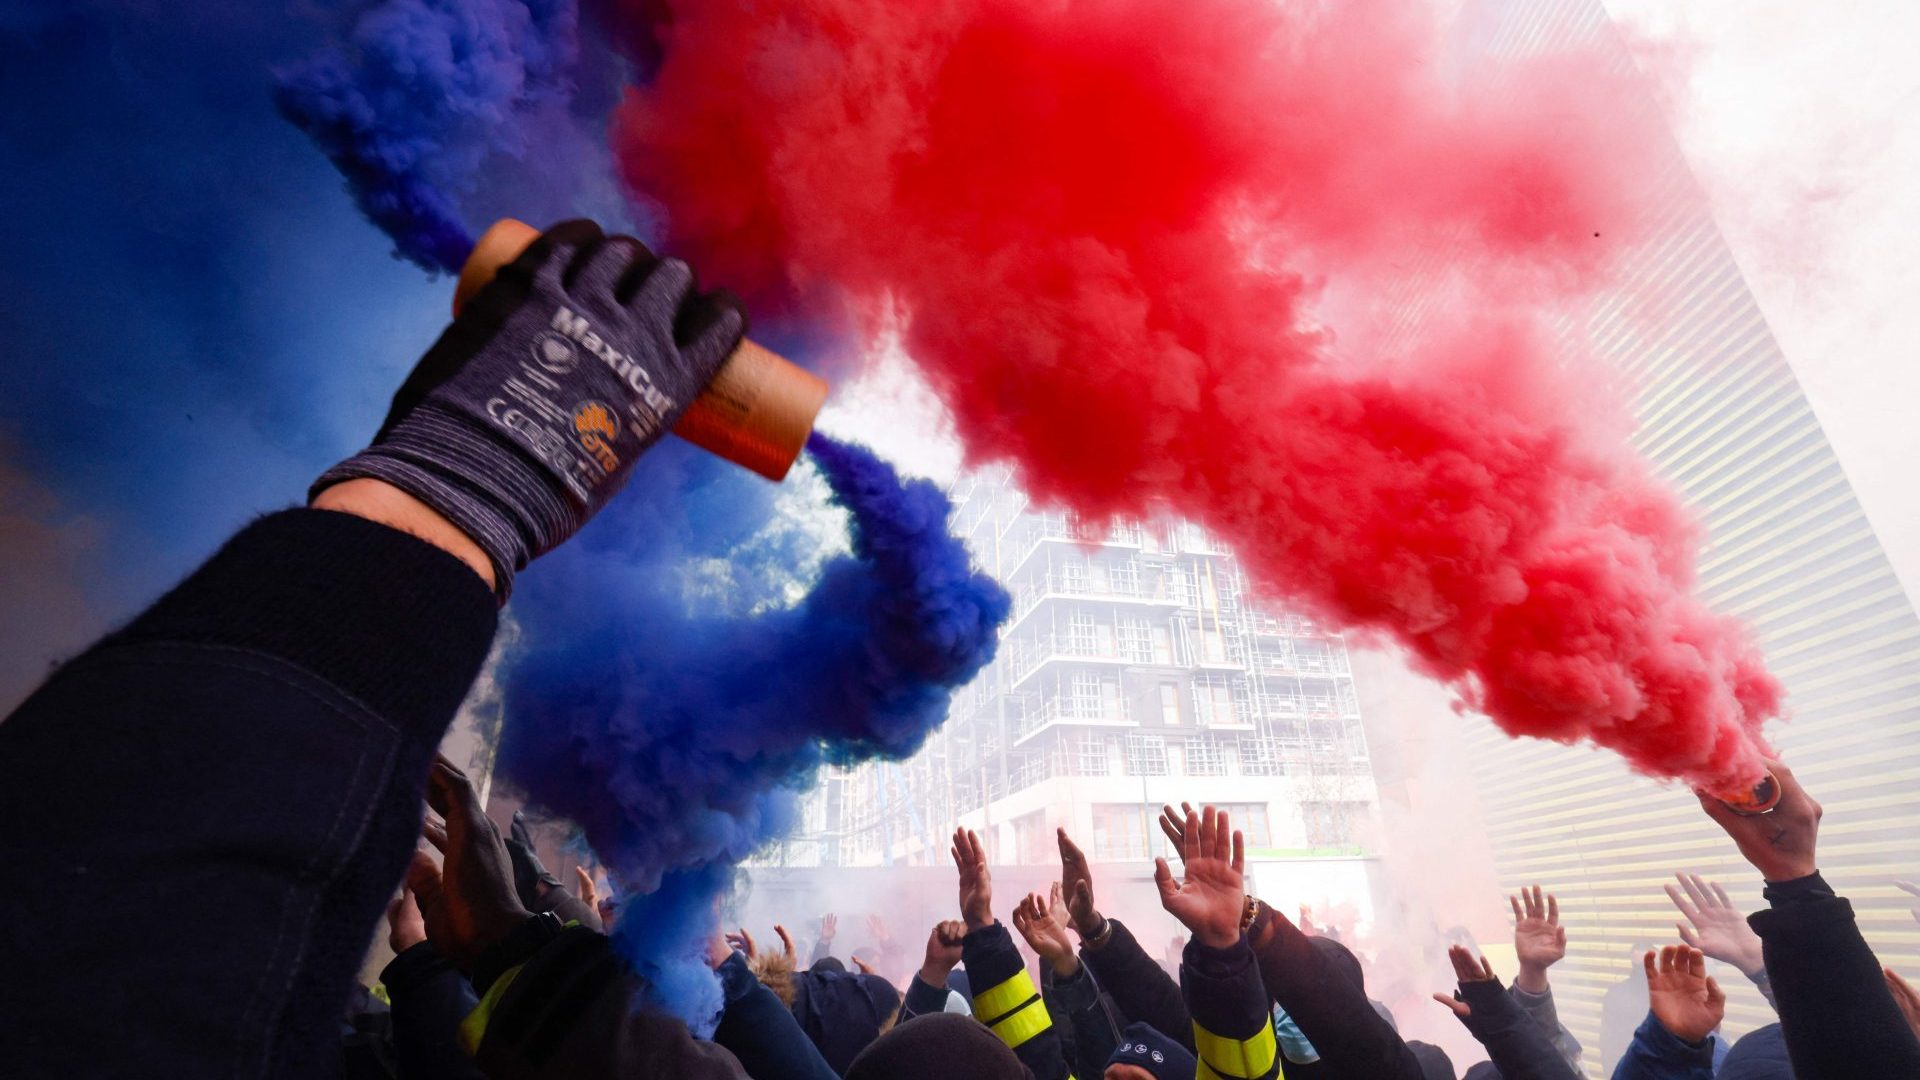 CGT trade union members join a protest in Saint Denis, Paris. Photo: Geoffroy Van Der Hasselt/ AFP/Getty